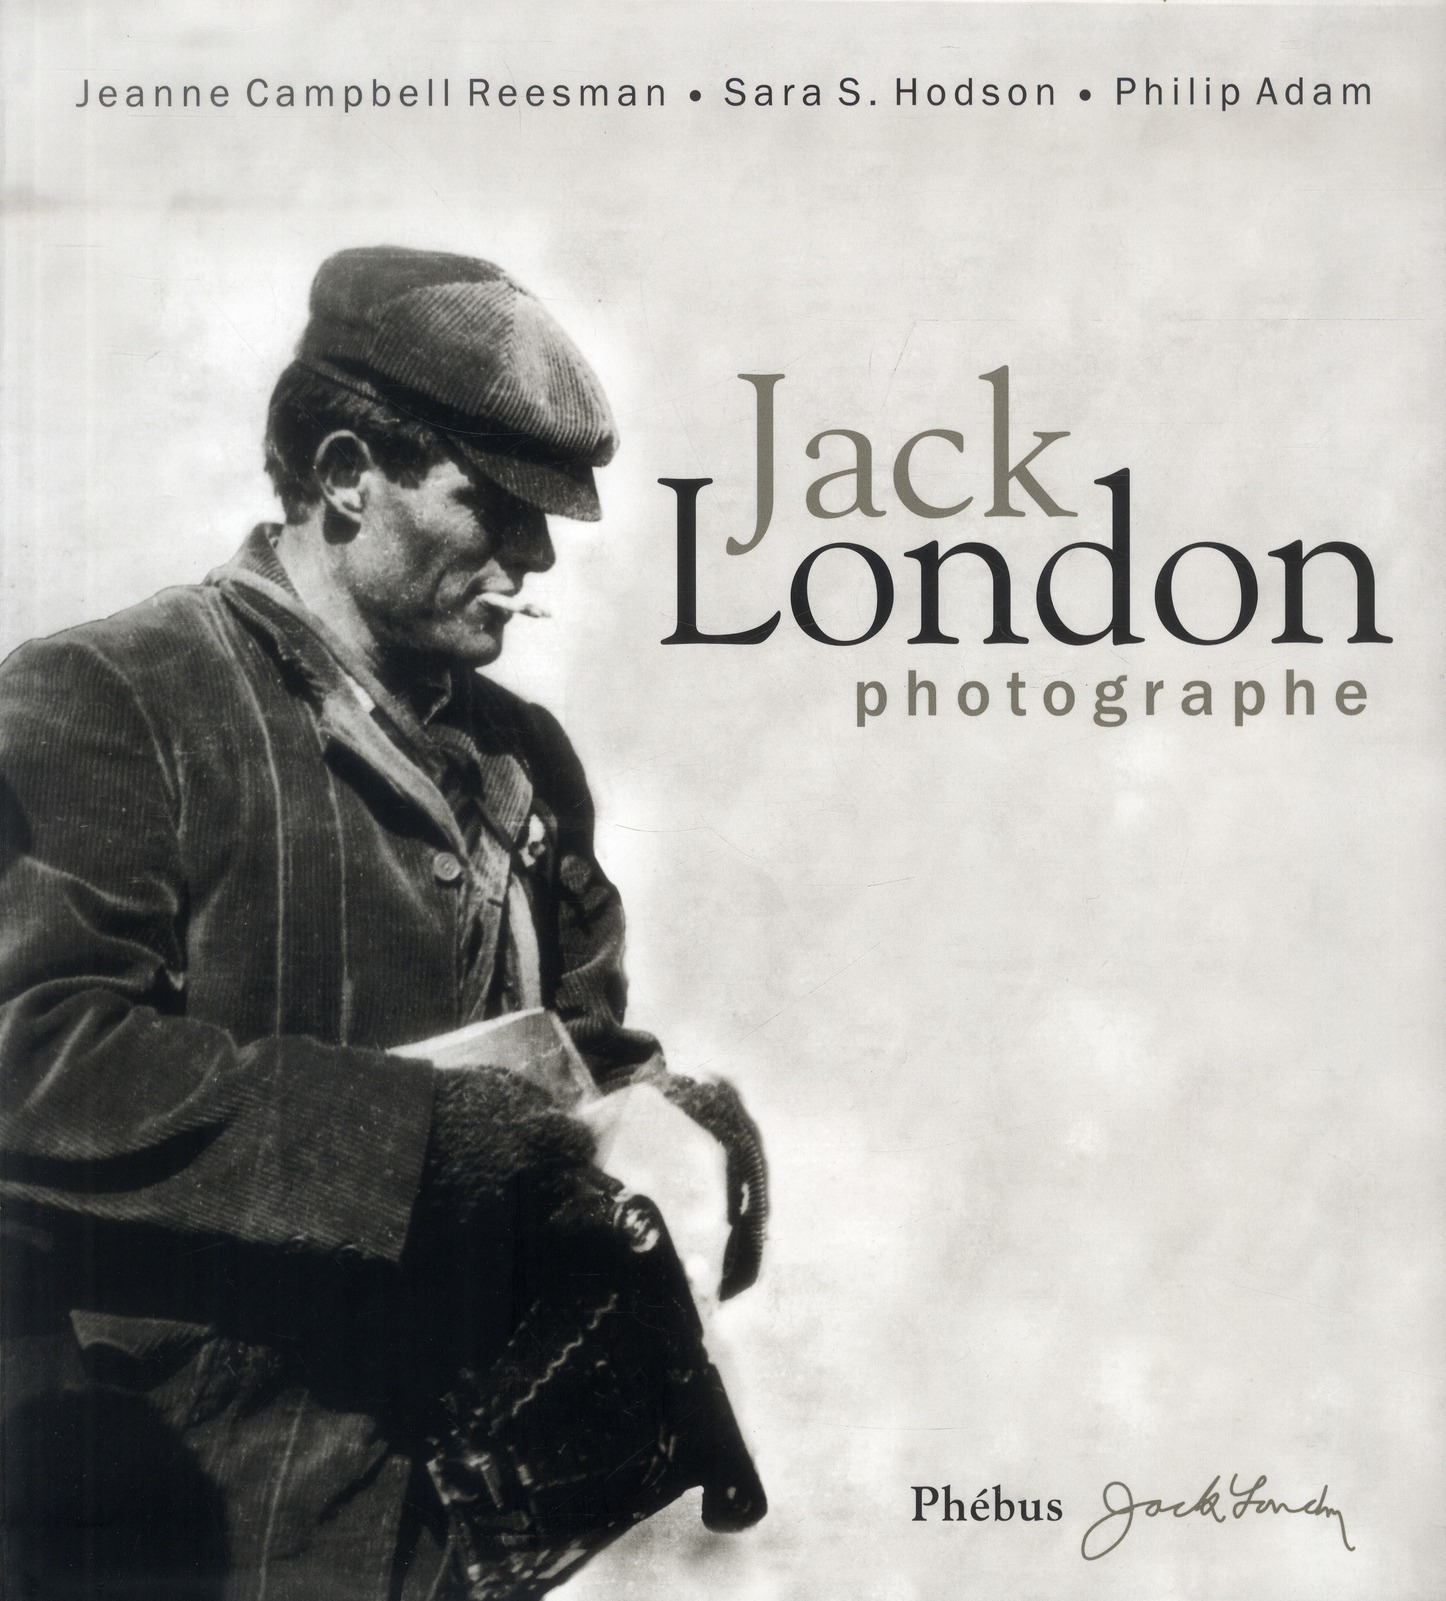 JACK LONDON PHOTOGRAPHE